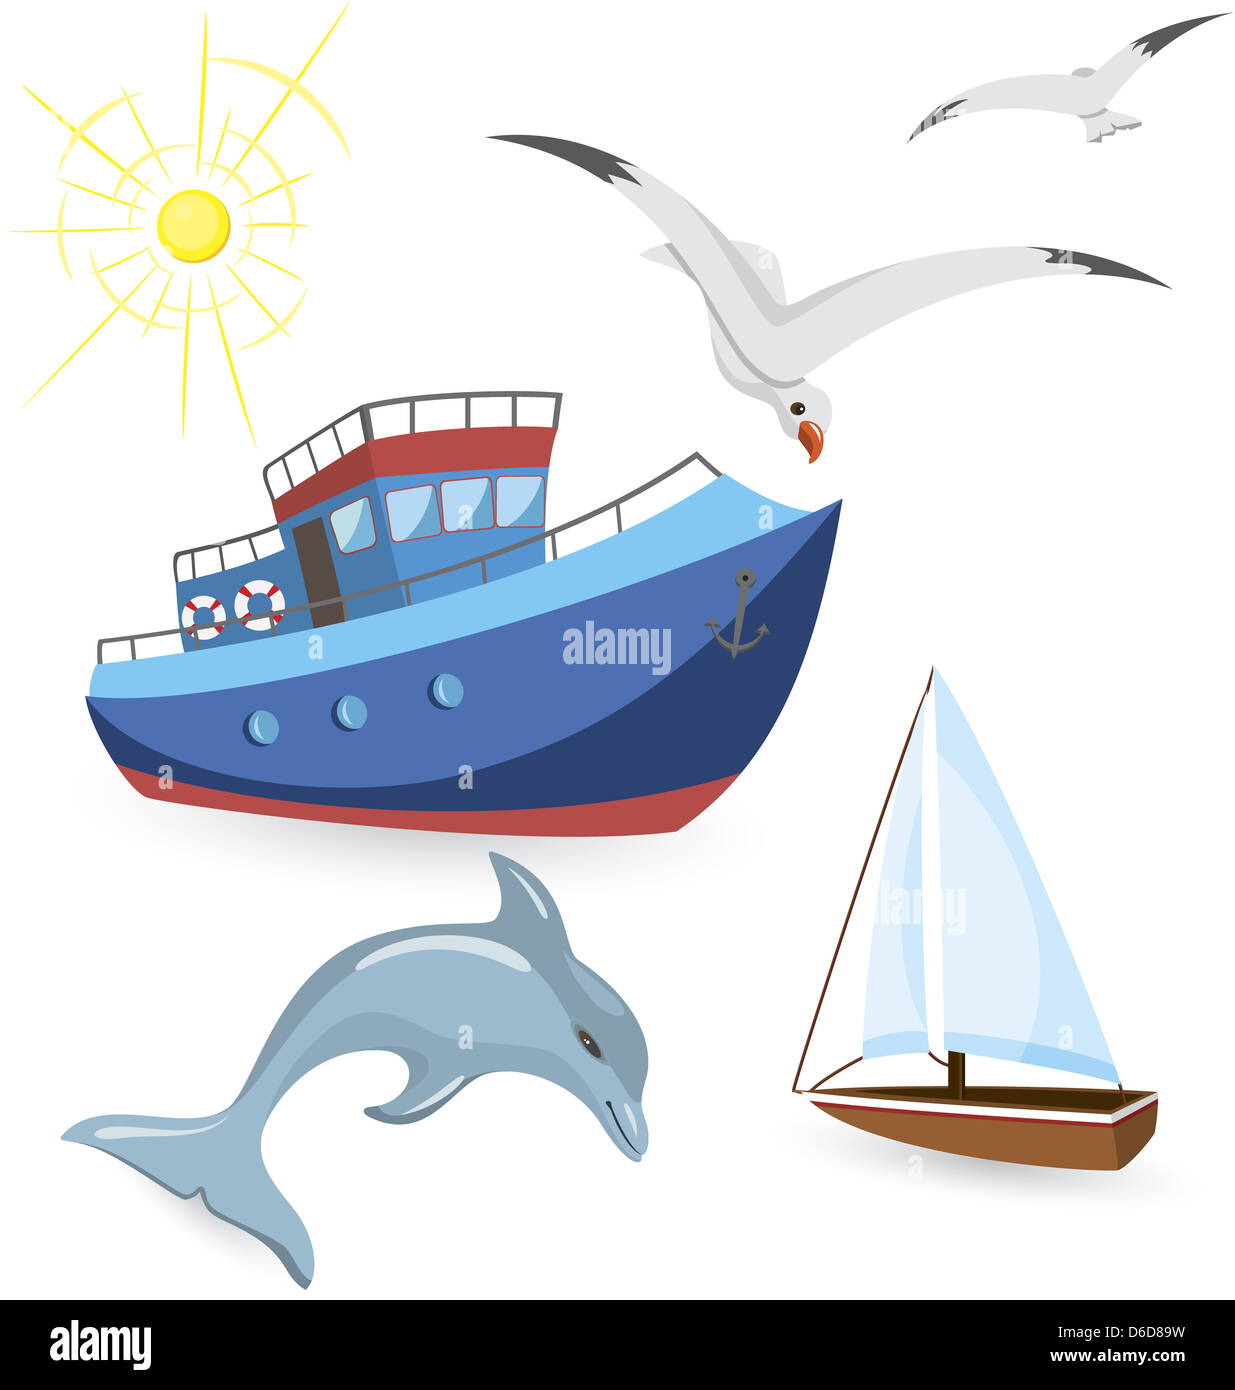 Boats-dolphin-seagulls Stock Photo